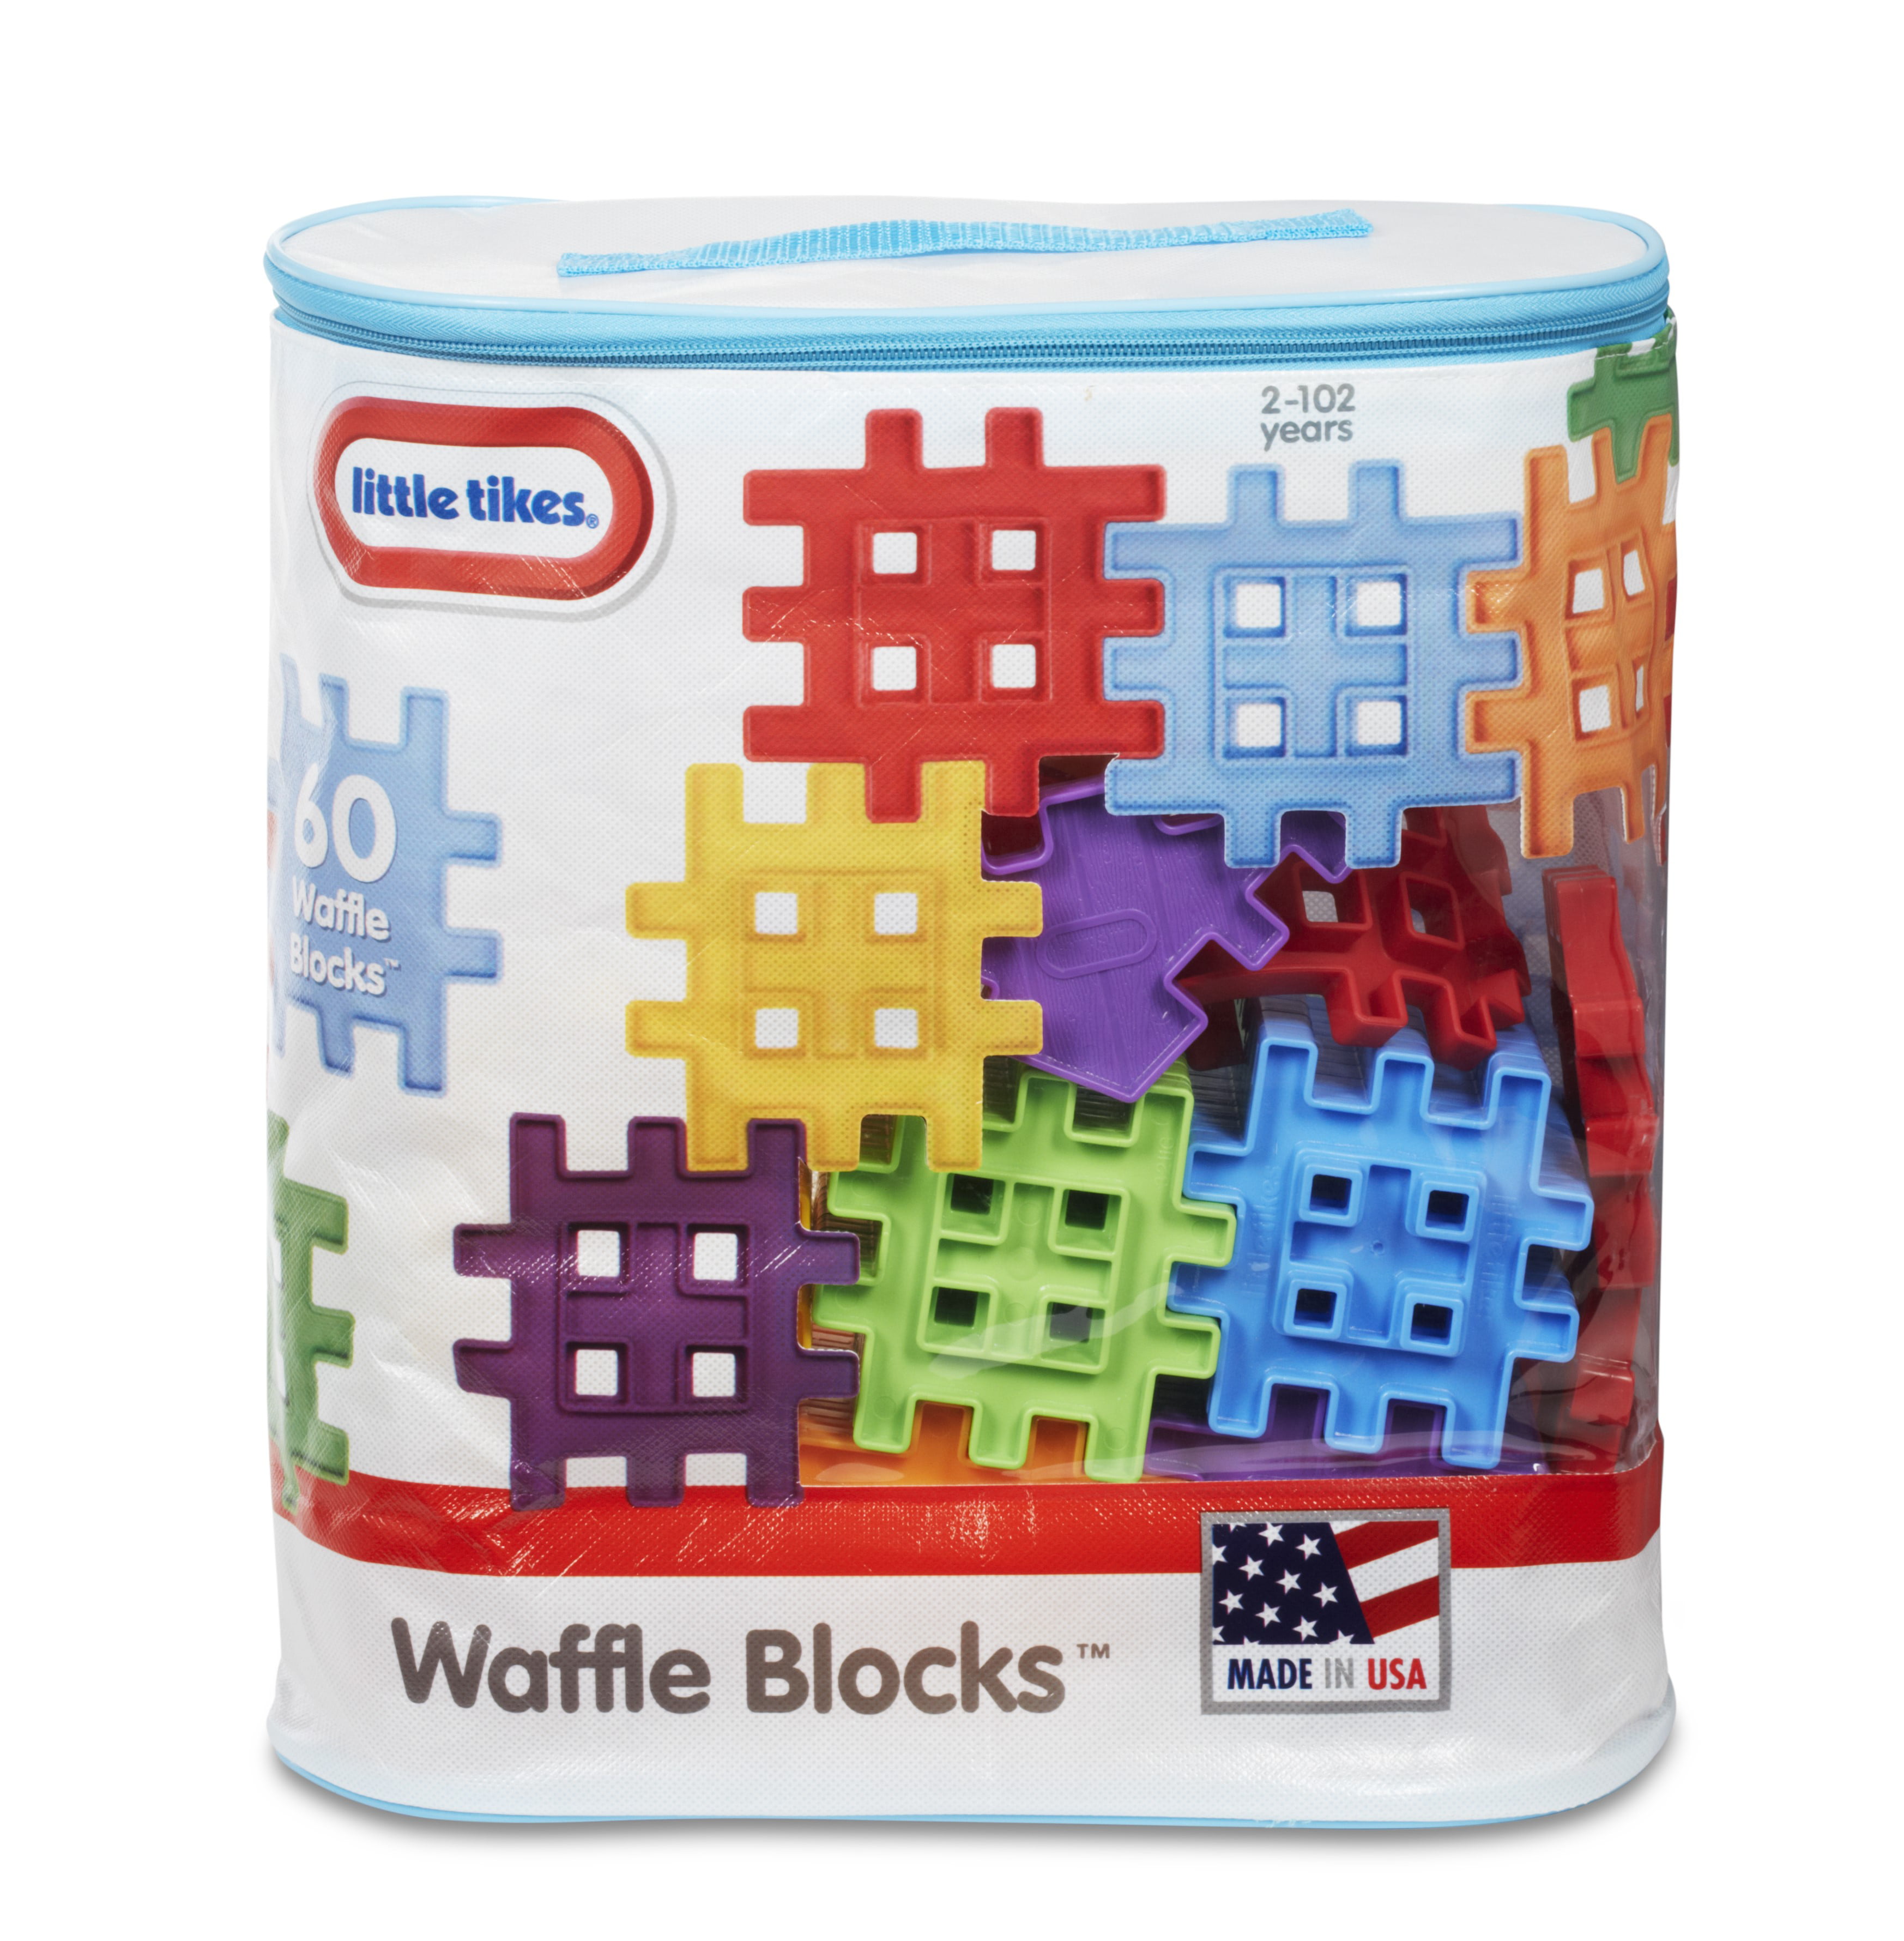 plastic connecting blocks toys